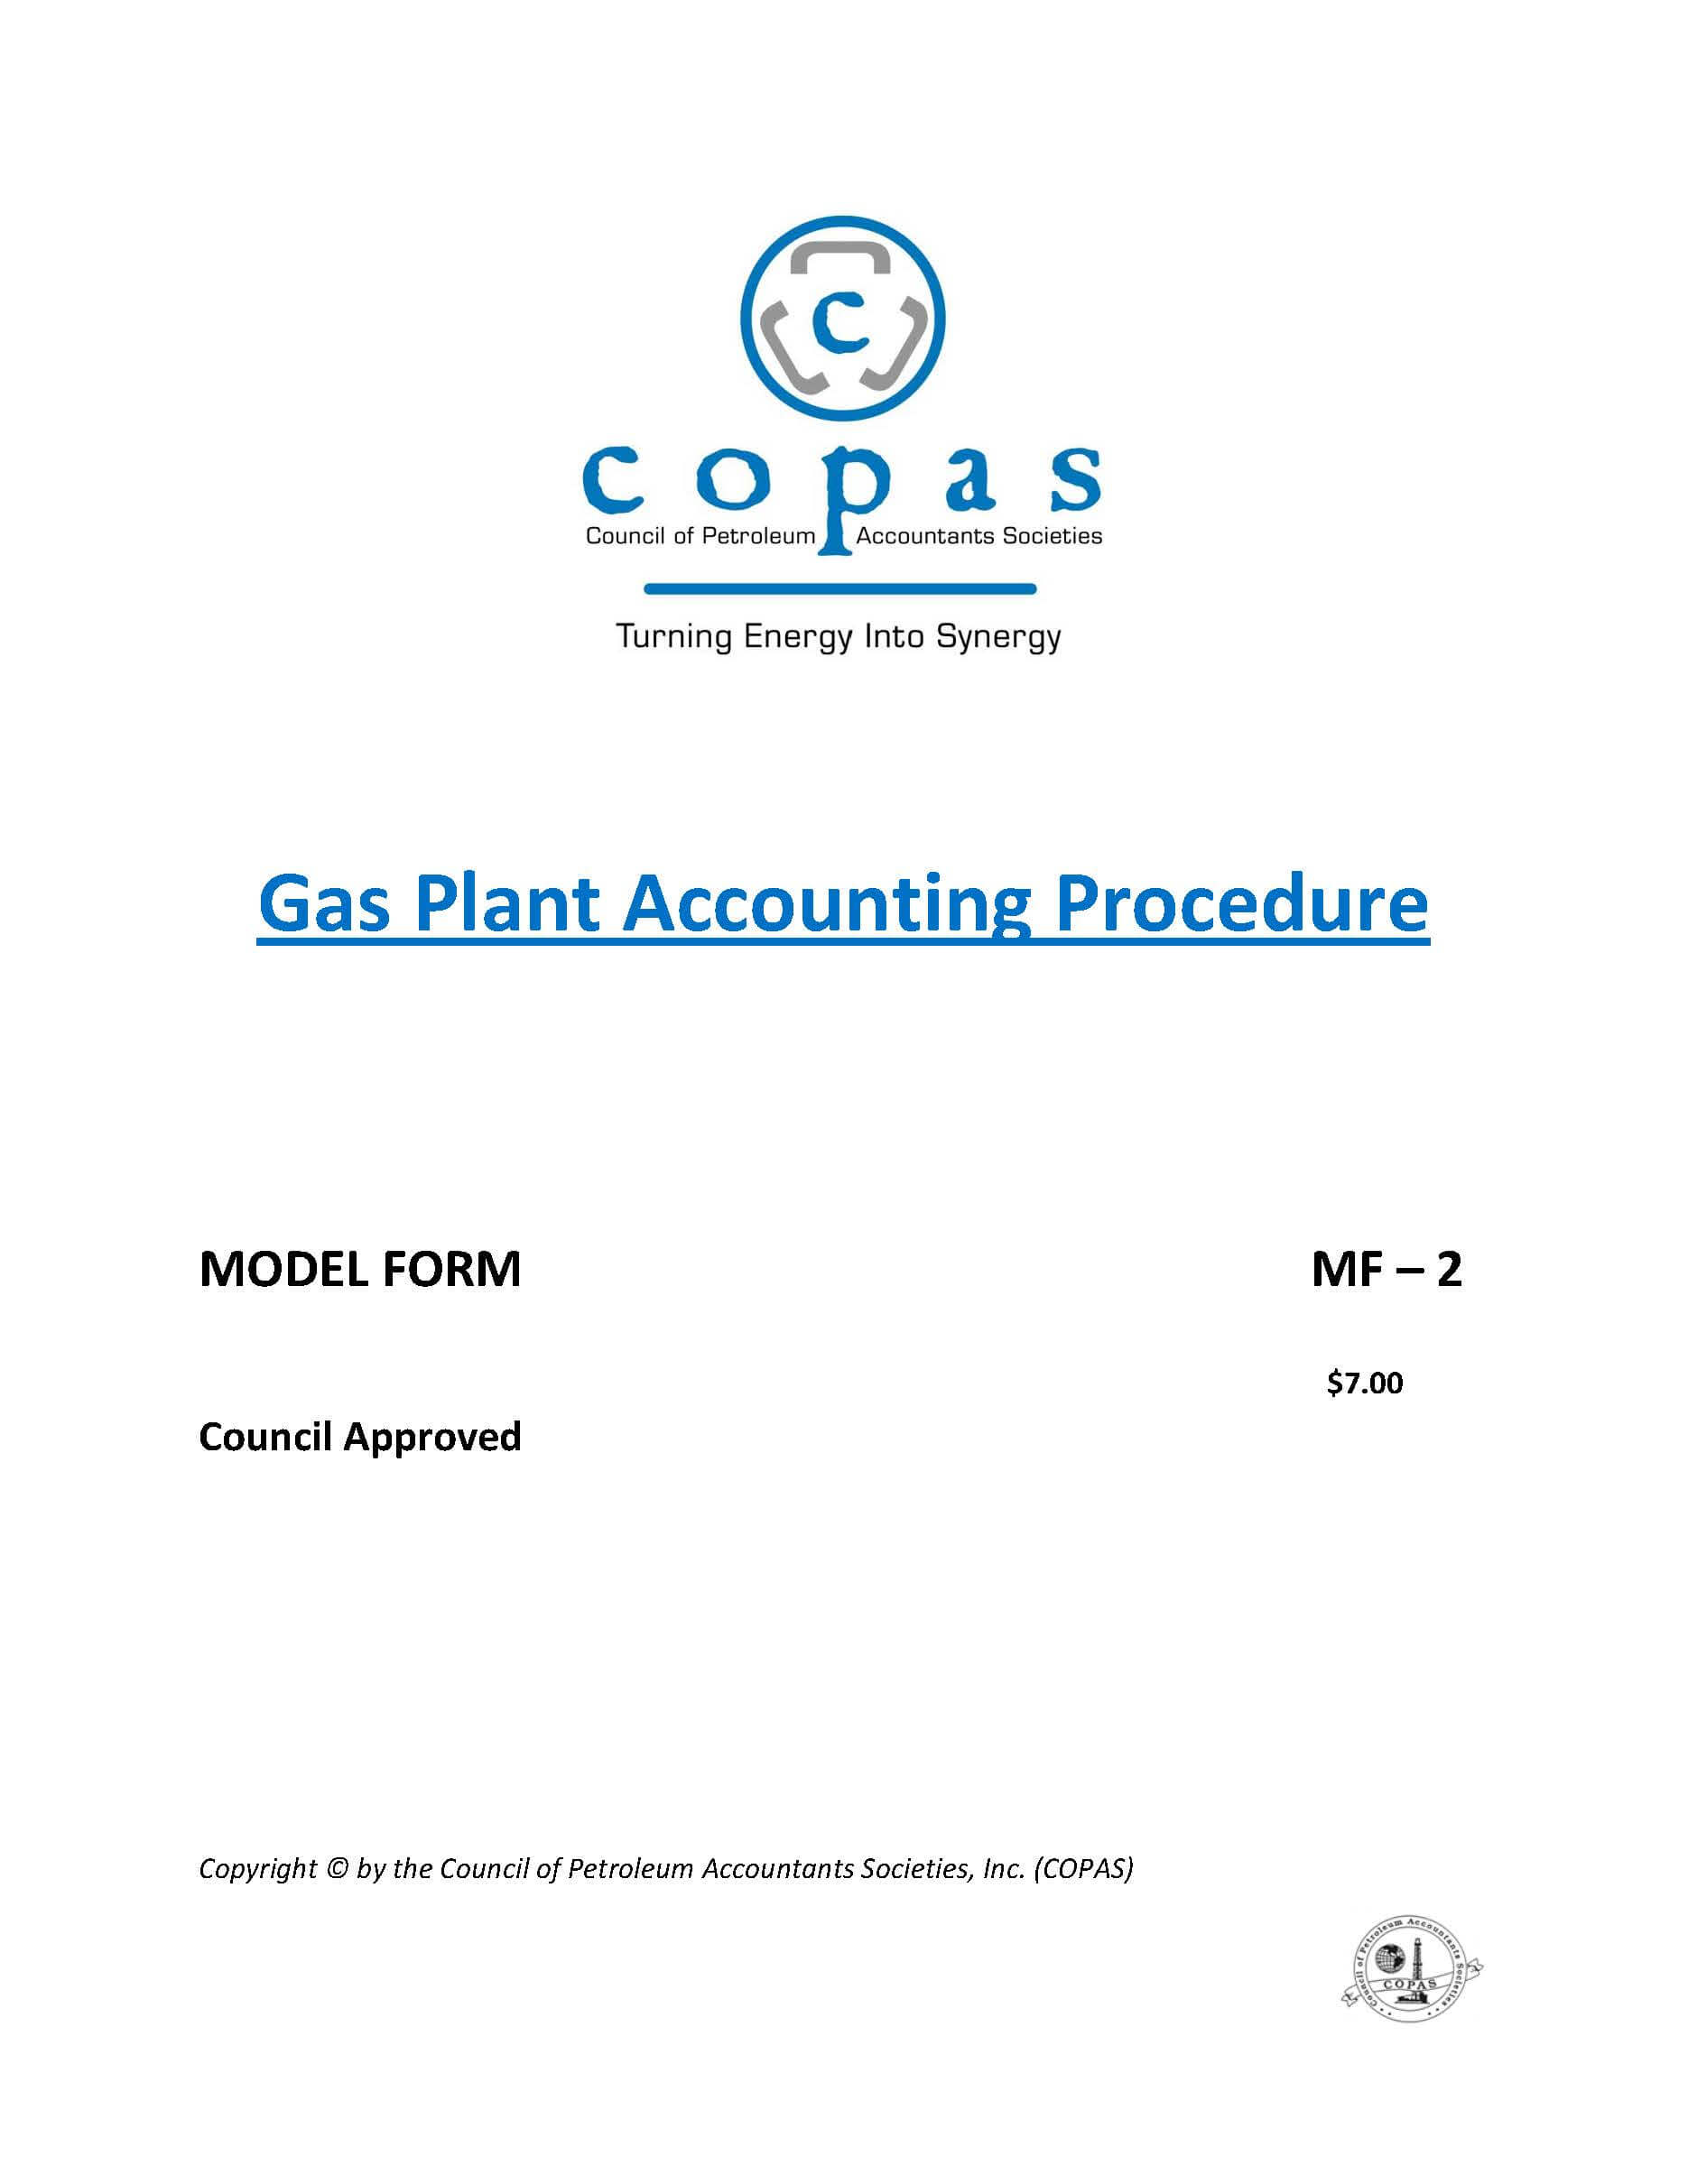 MF-2 Gas Plant Model Form Accounting Procedure